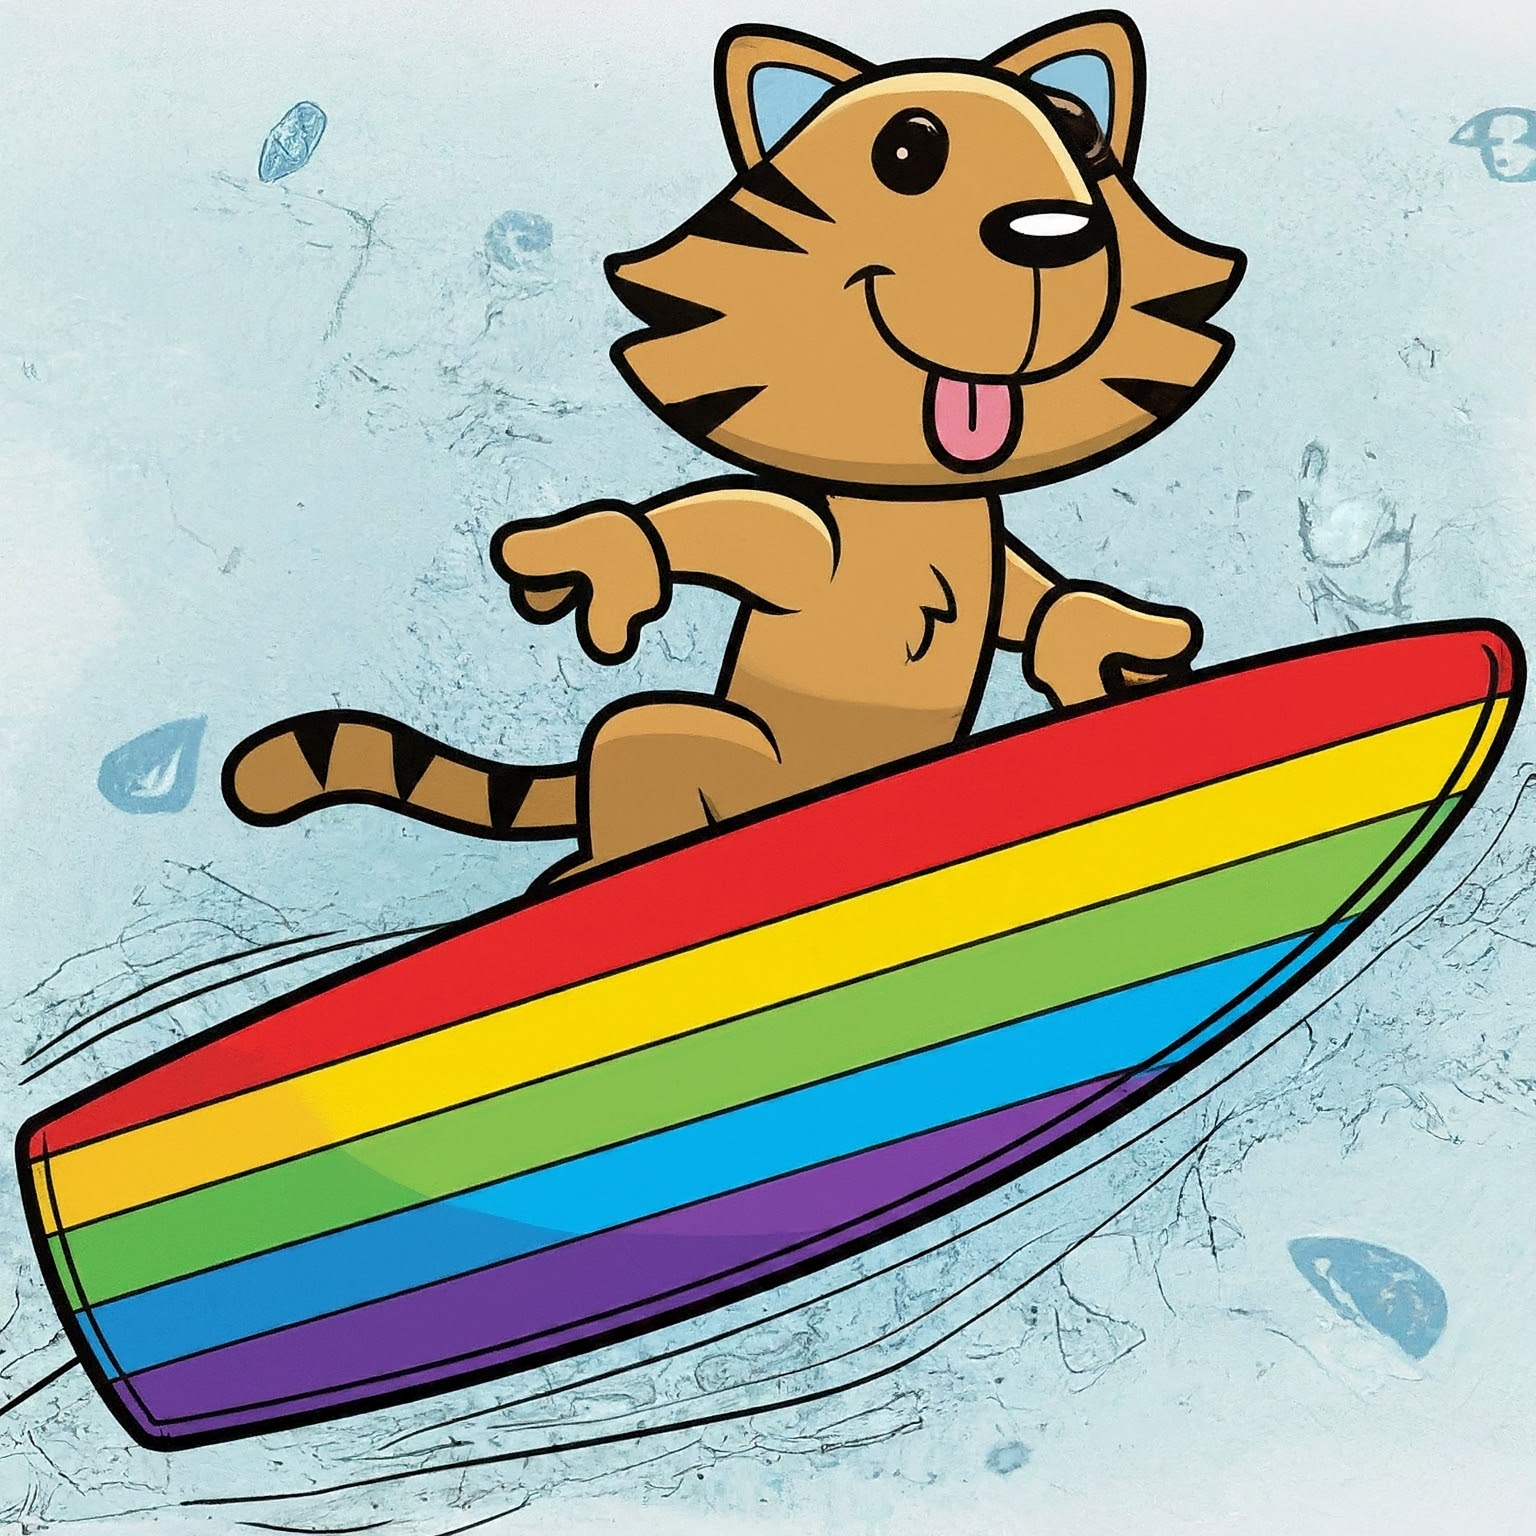 A Cartoon Tiger Riding A Rainbow Surfboard.